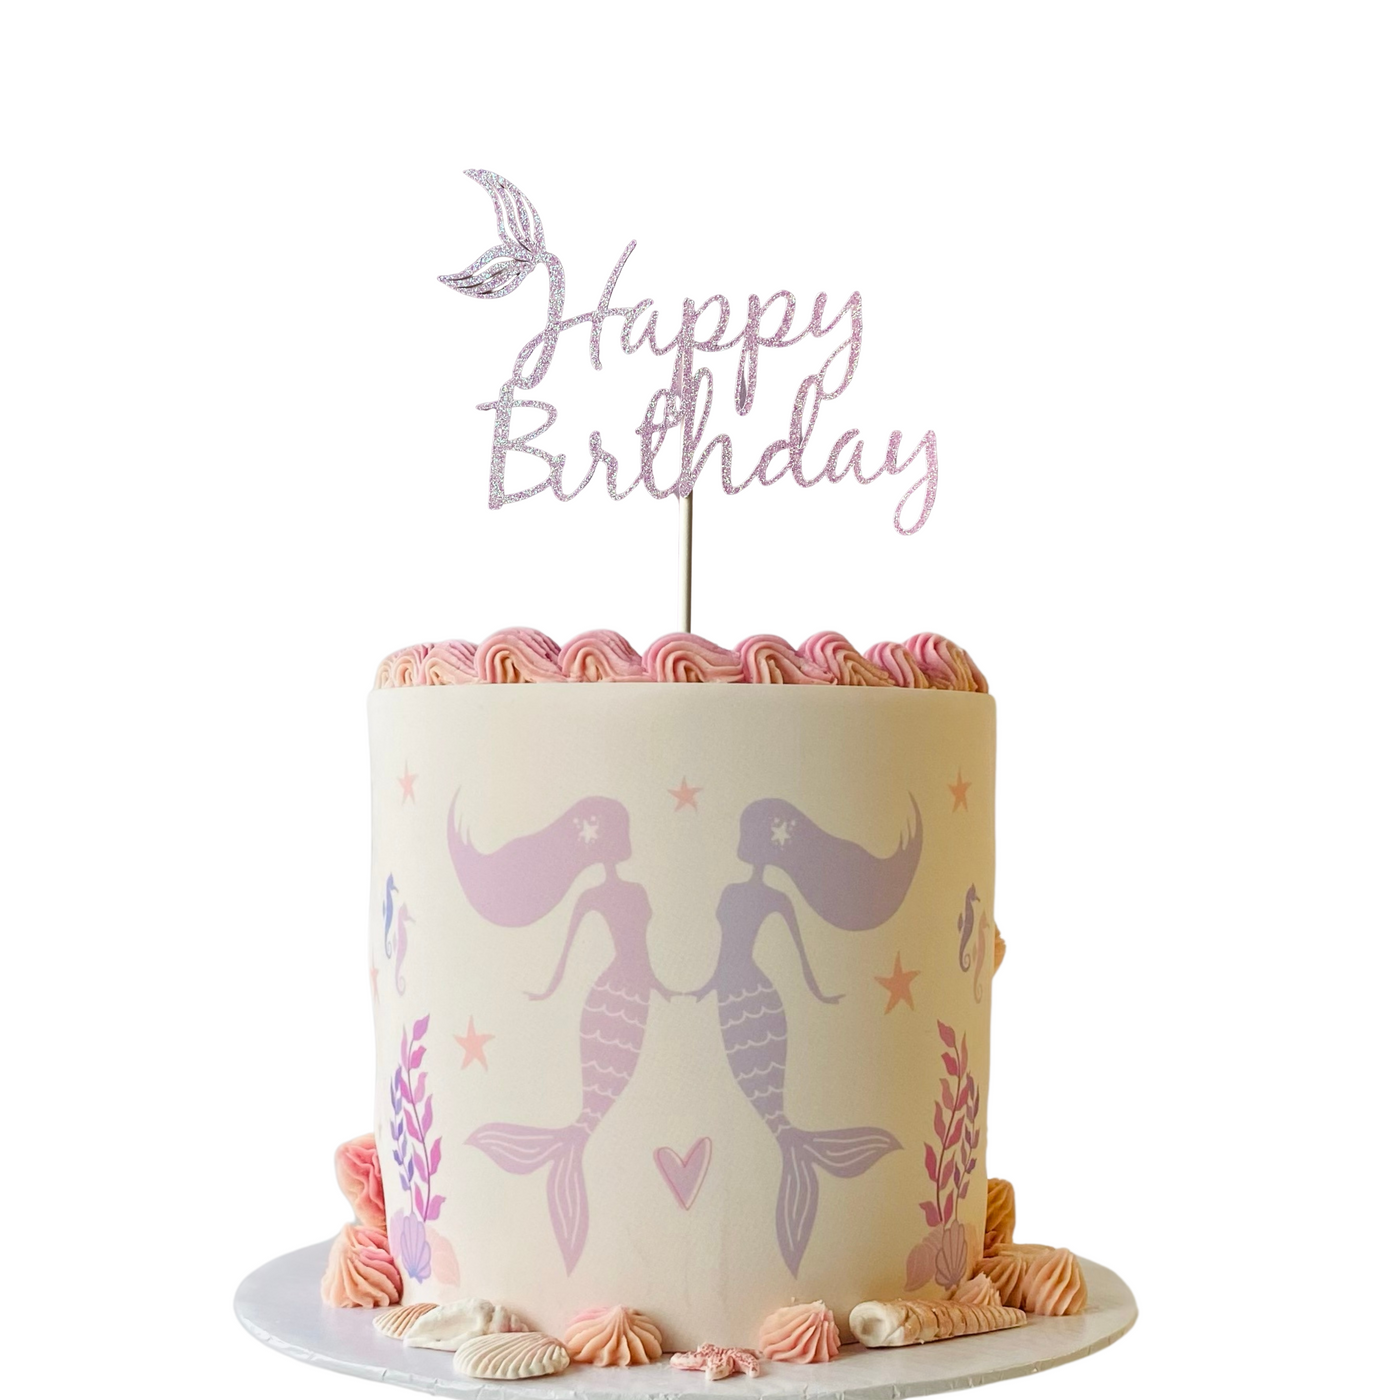 Happy Birthday Cake Topper, mermaid theme